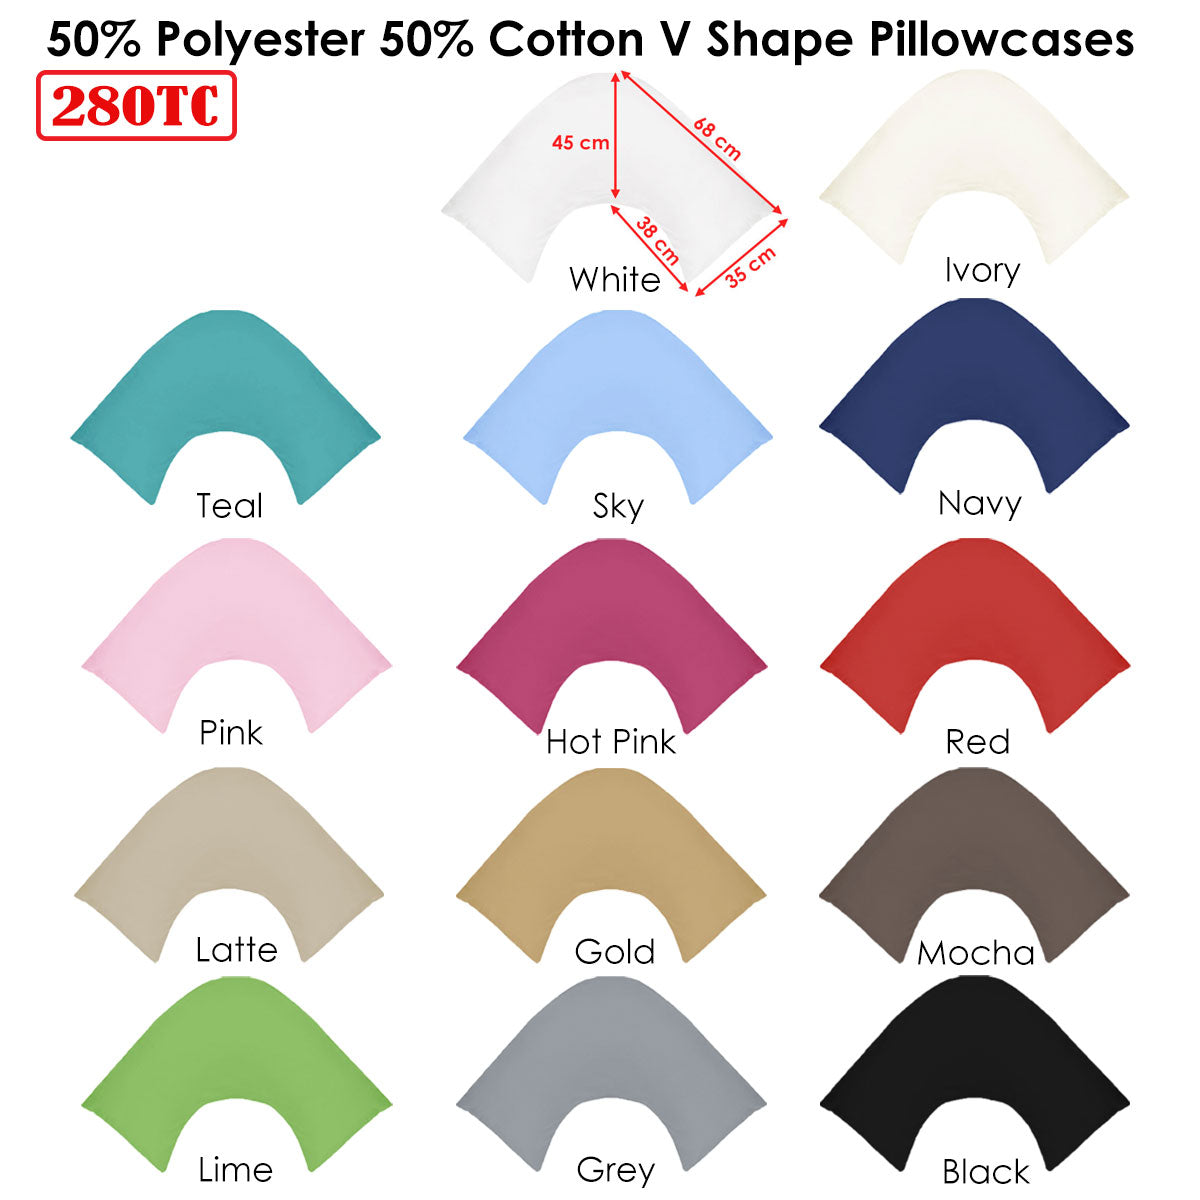 280TC Polyester Cotton V Shape Pillowcase Teal